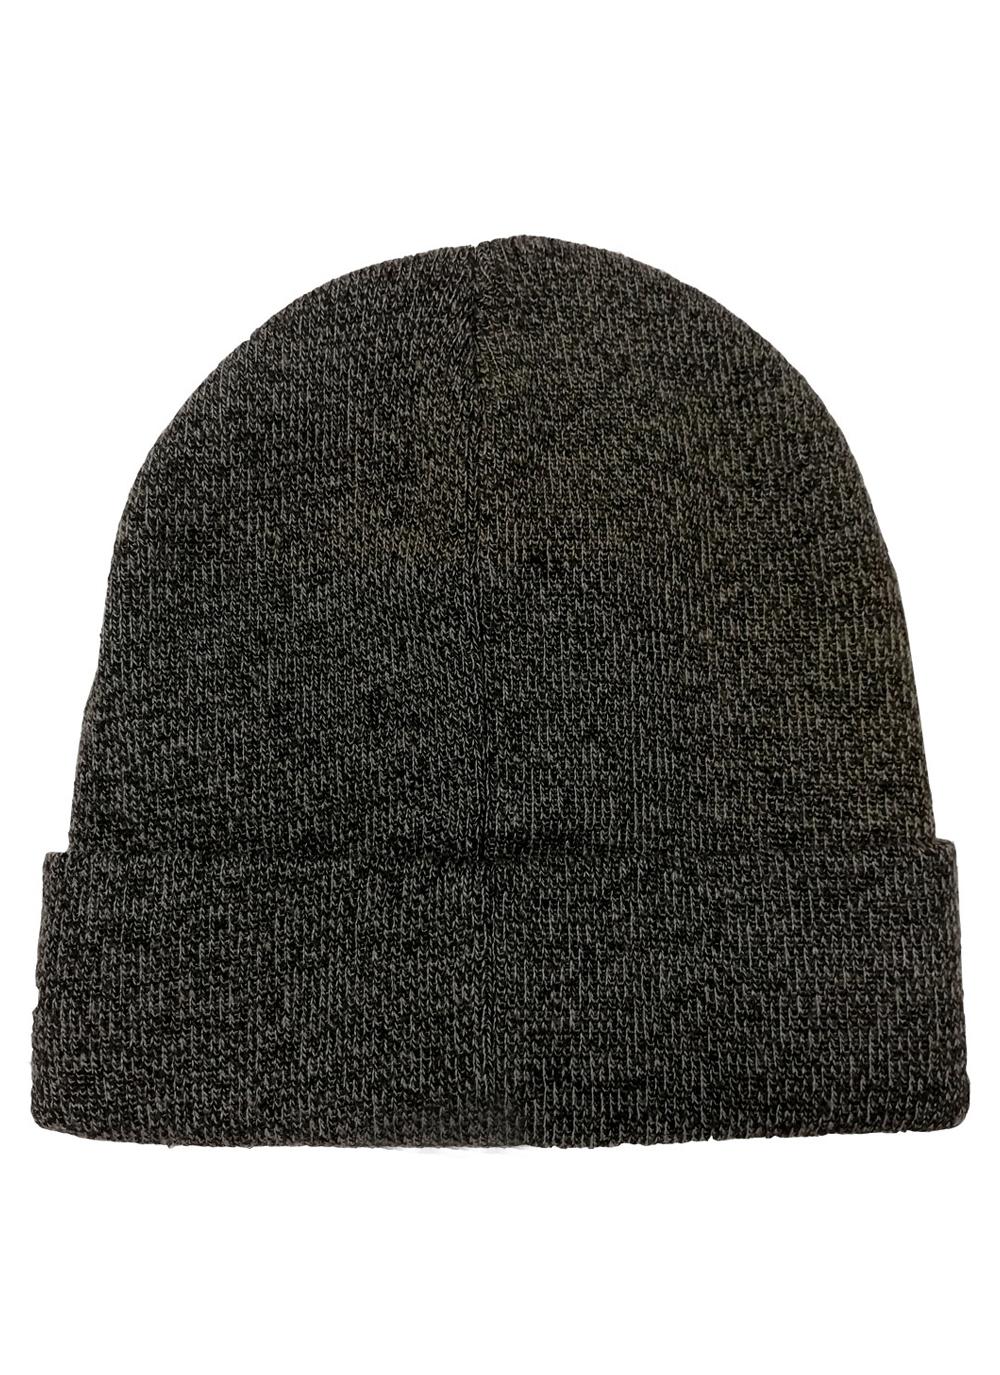 Ireland Knit Beanie Hat | Blarney